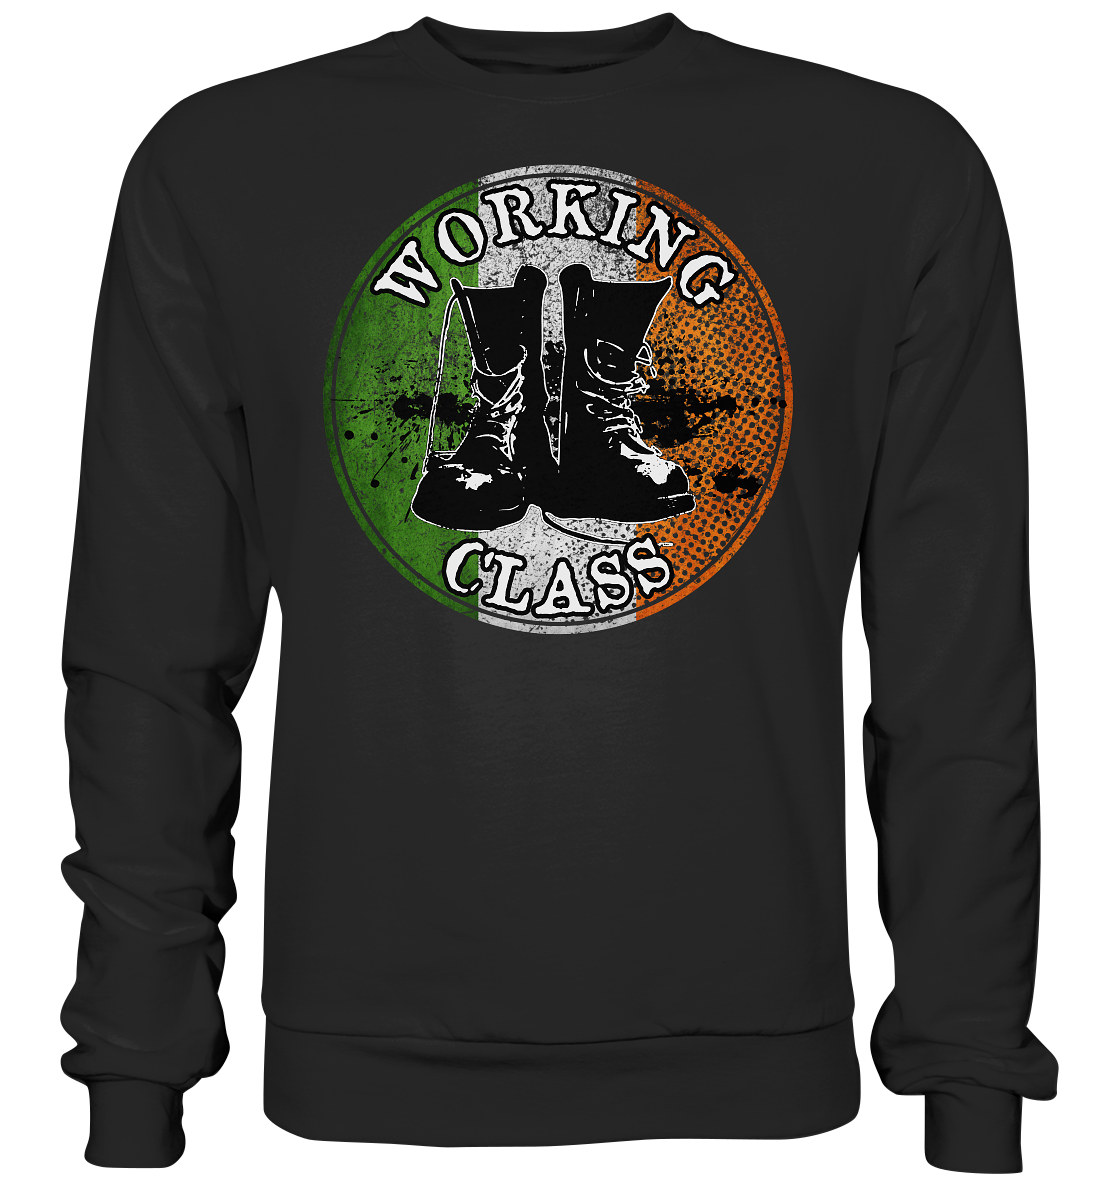 Working Class "Ireland" - Basic Sweatshirt